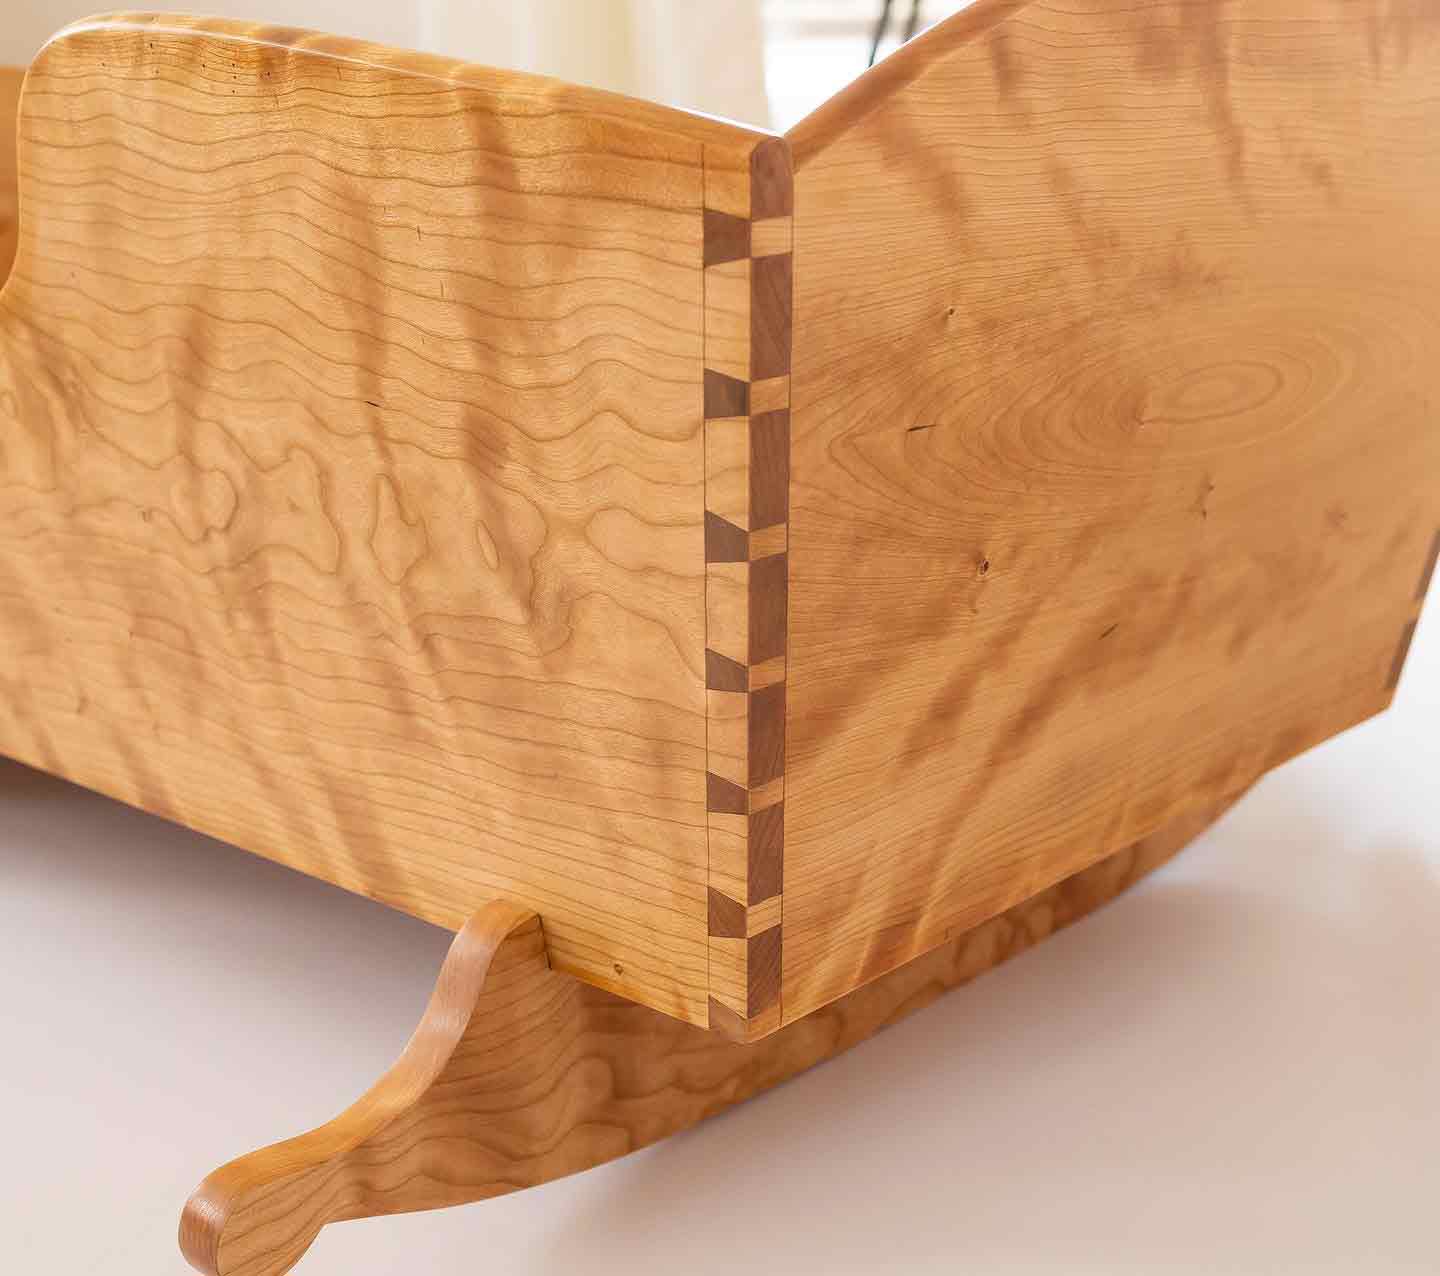 Highly figured cherry handmade wooden cradle